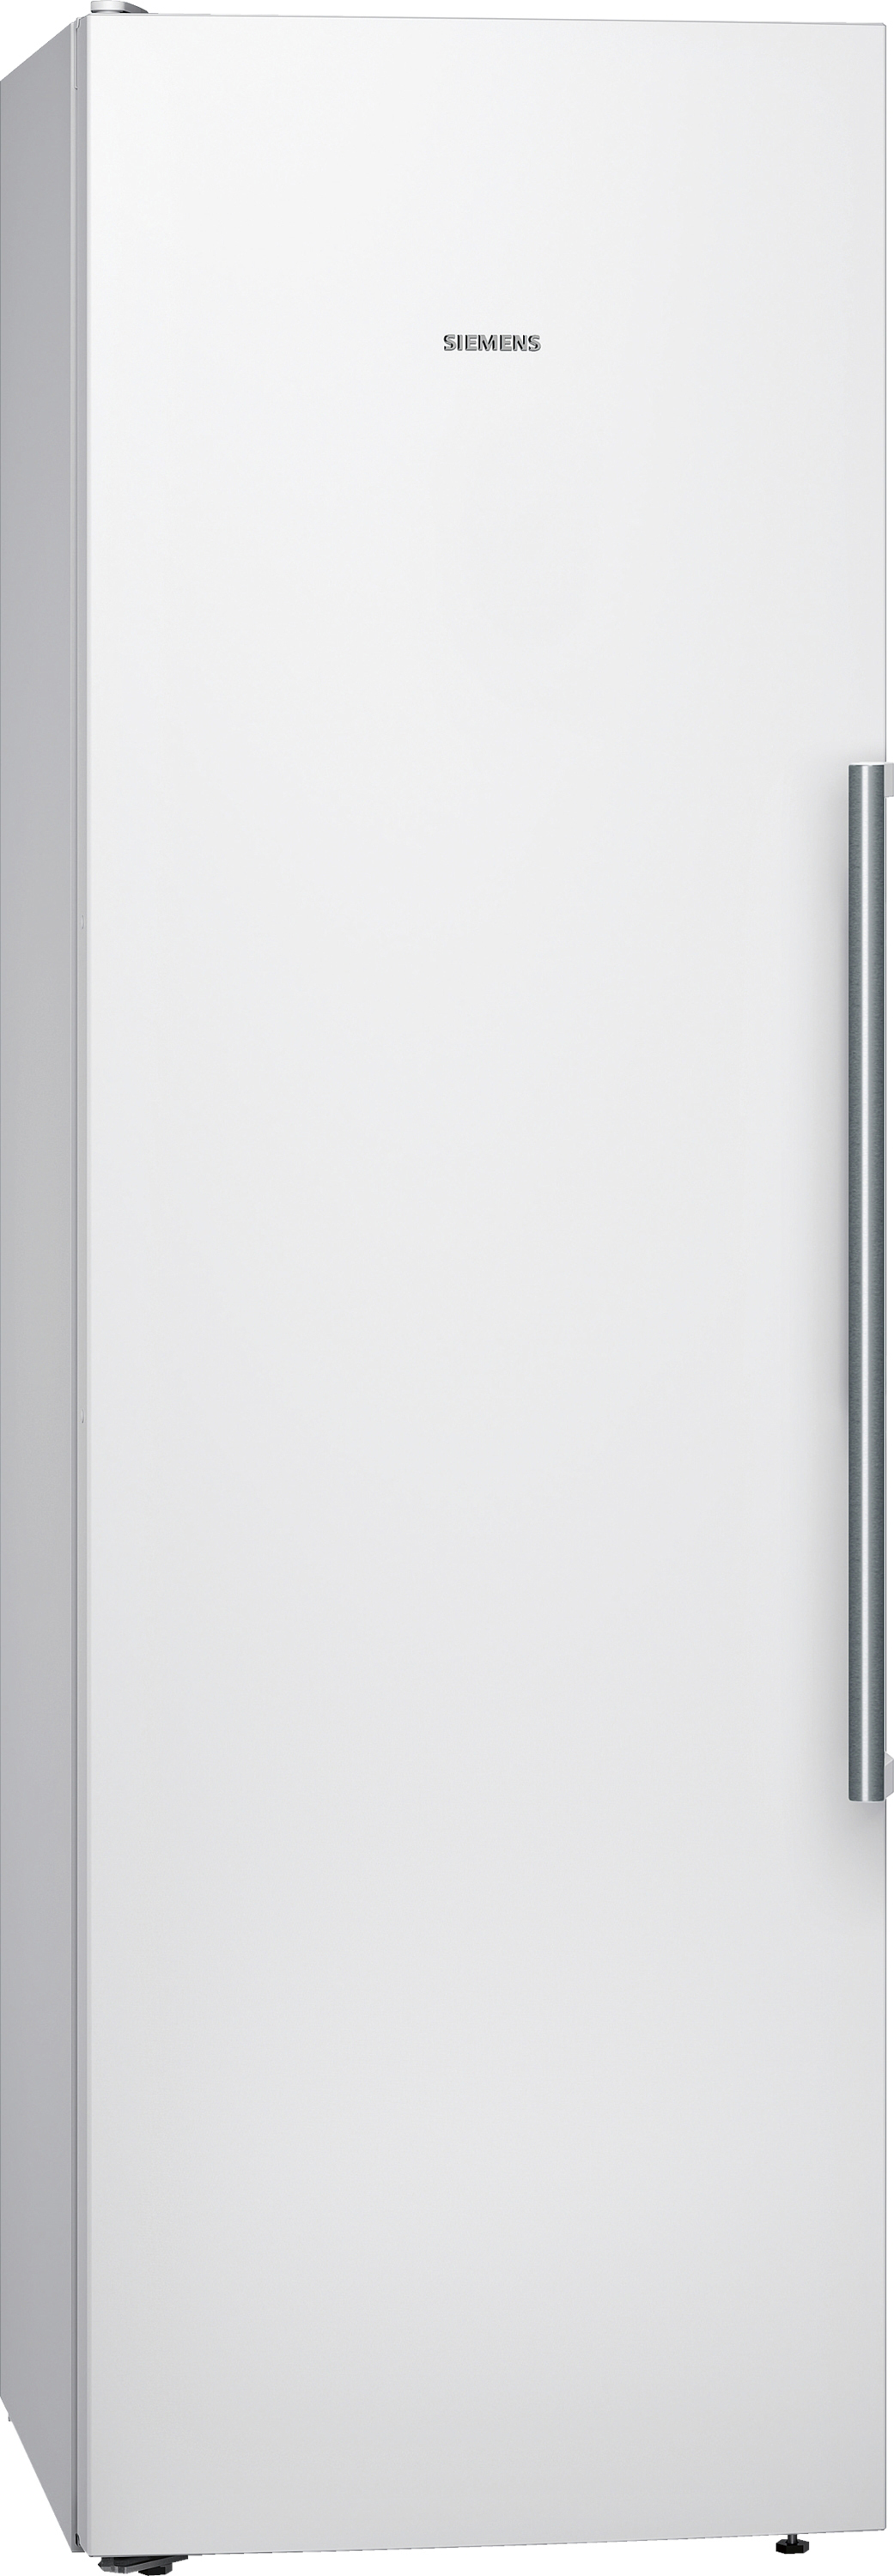 SIEMENS KS36VAWEP iQ500 Kühlschrank Weiß) hoch, mm (E, 1860